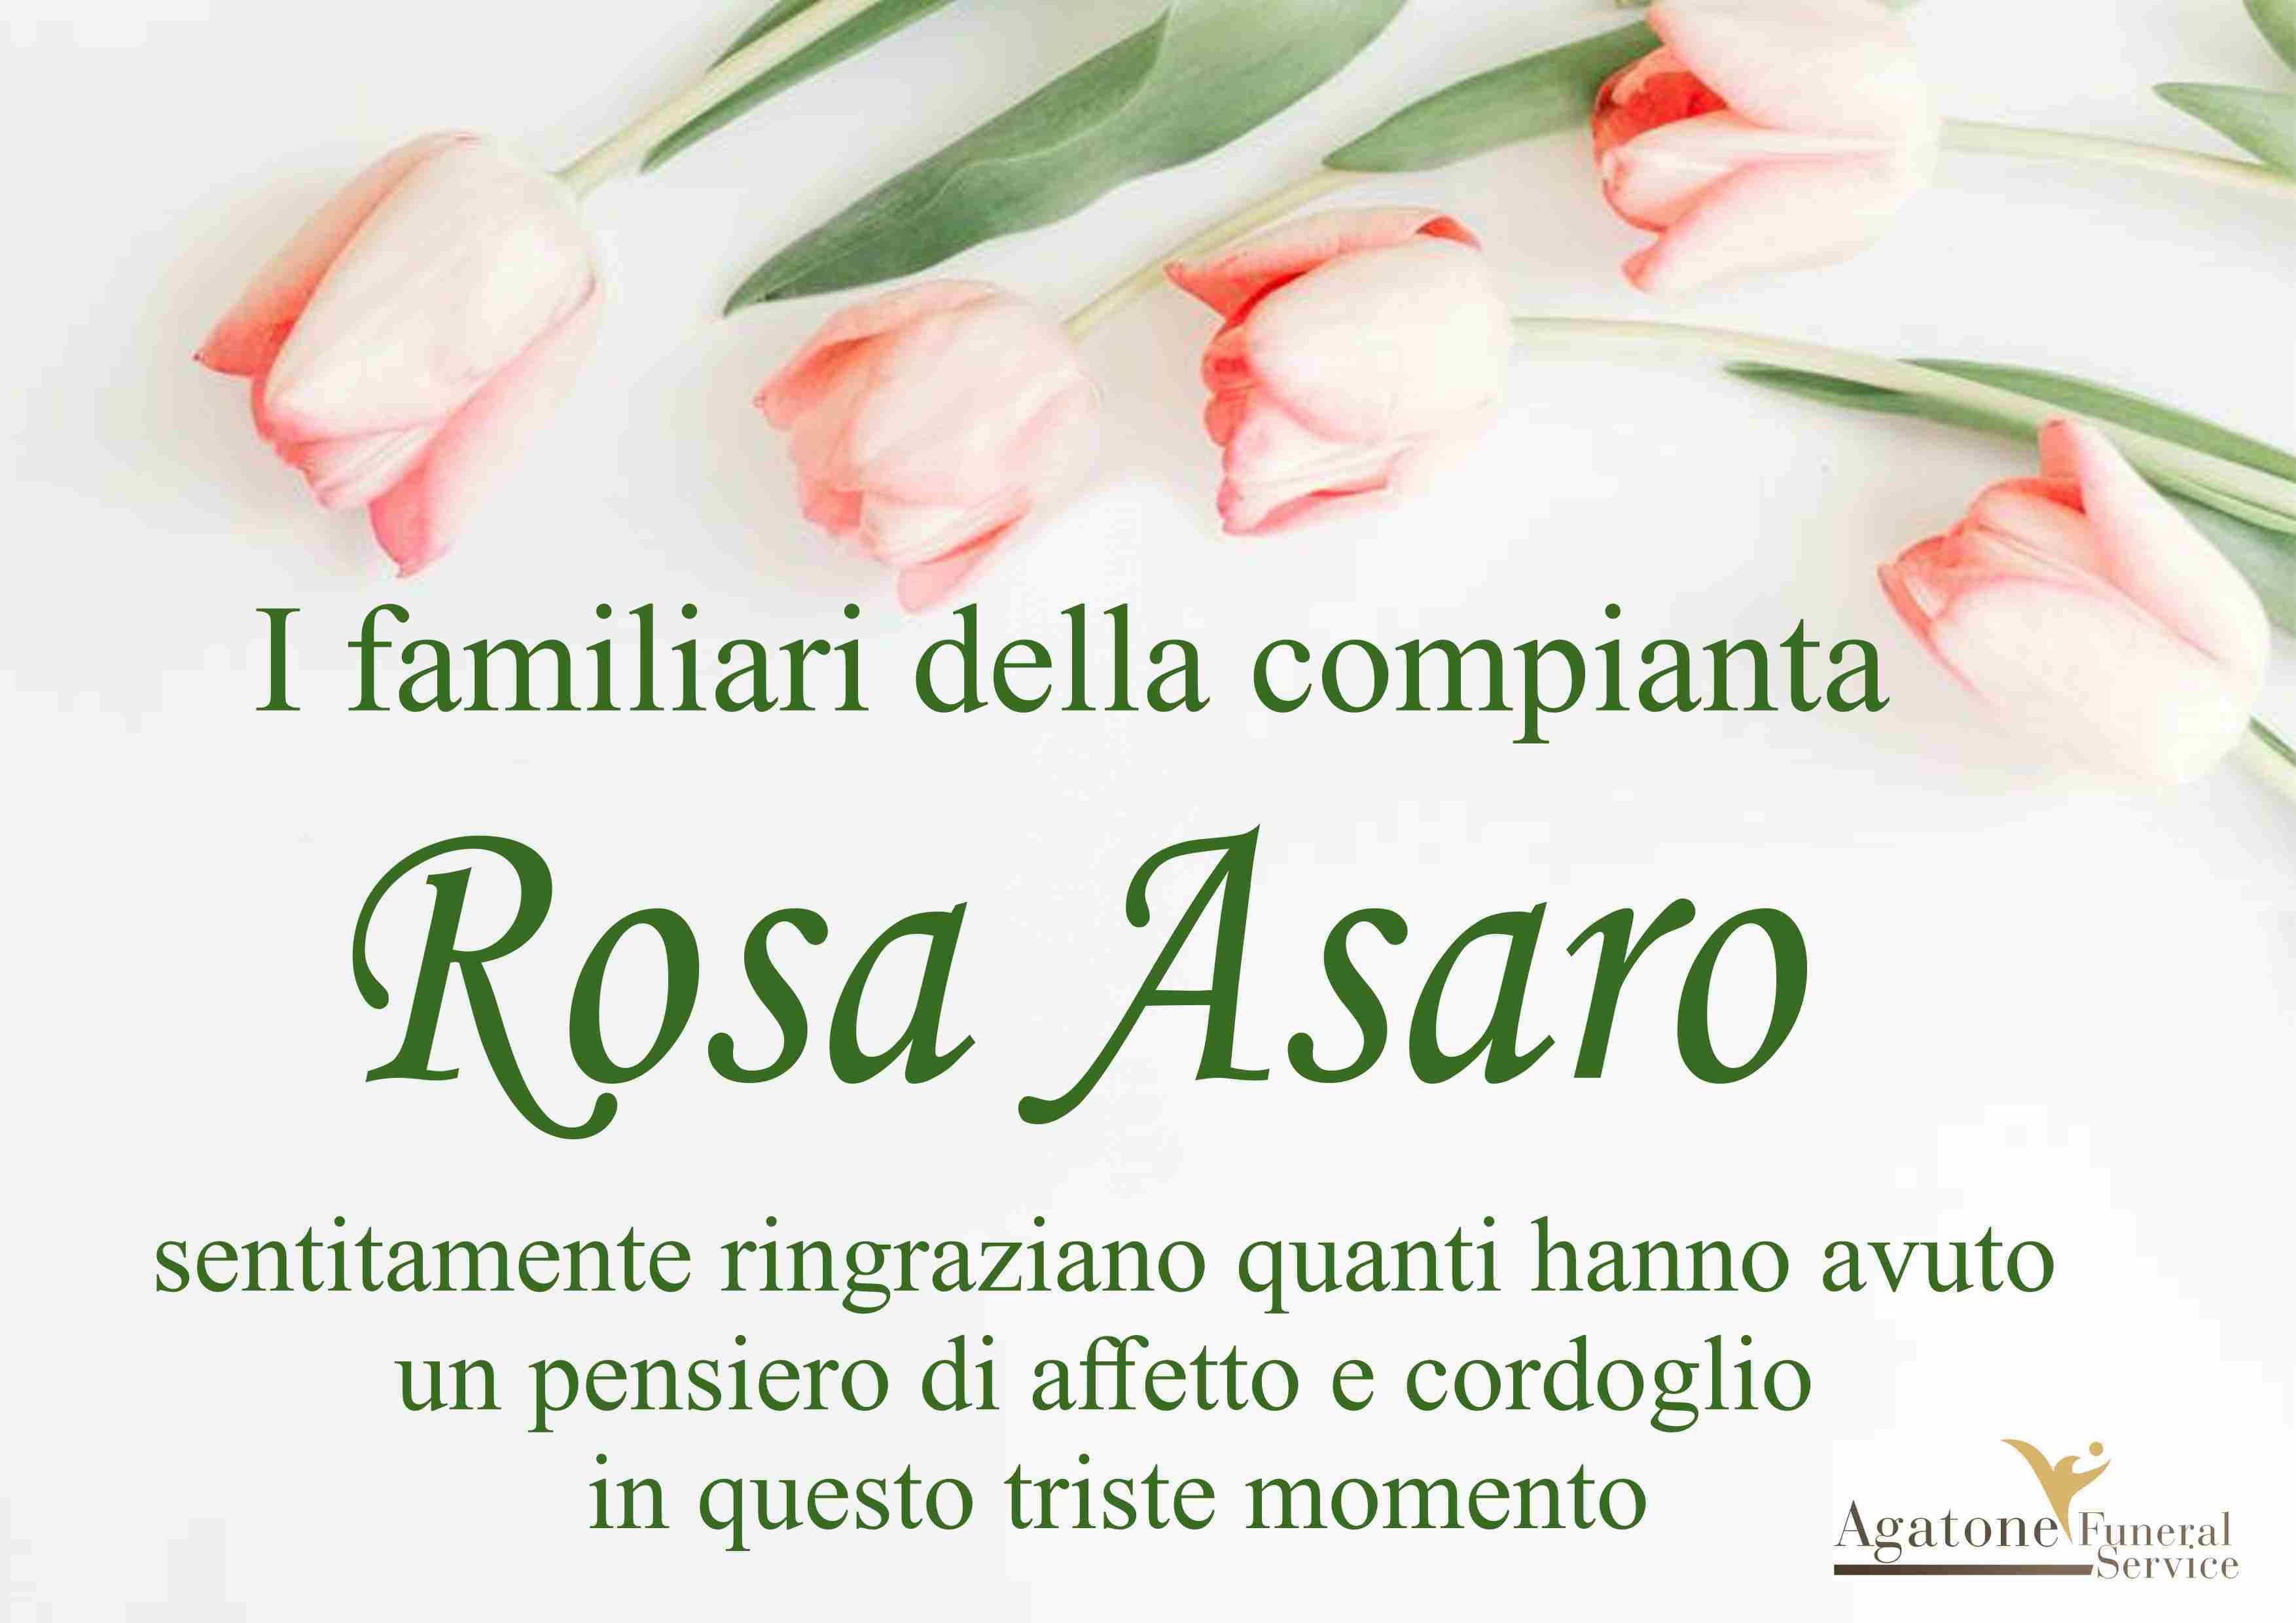 Rosa Asaro